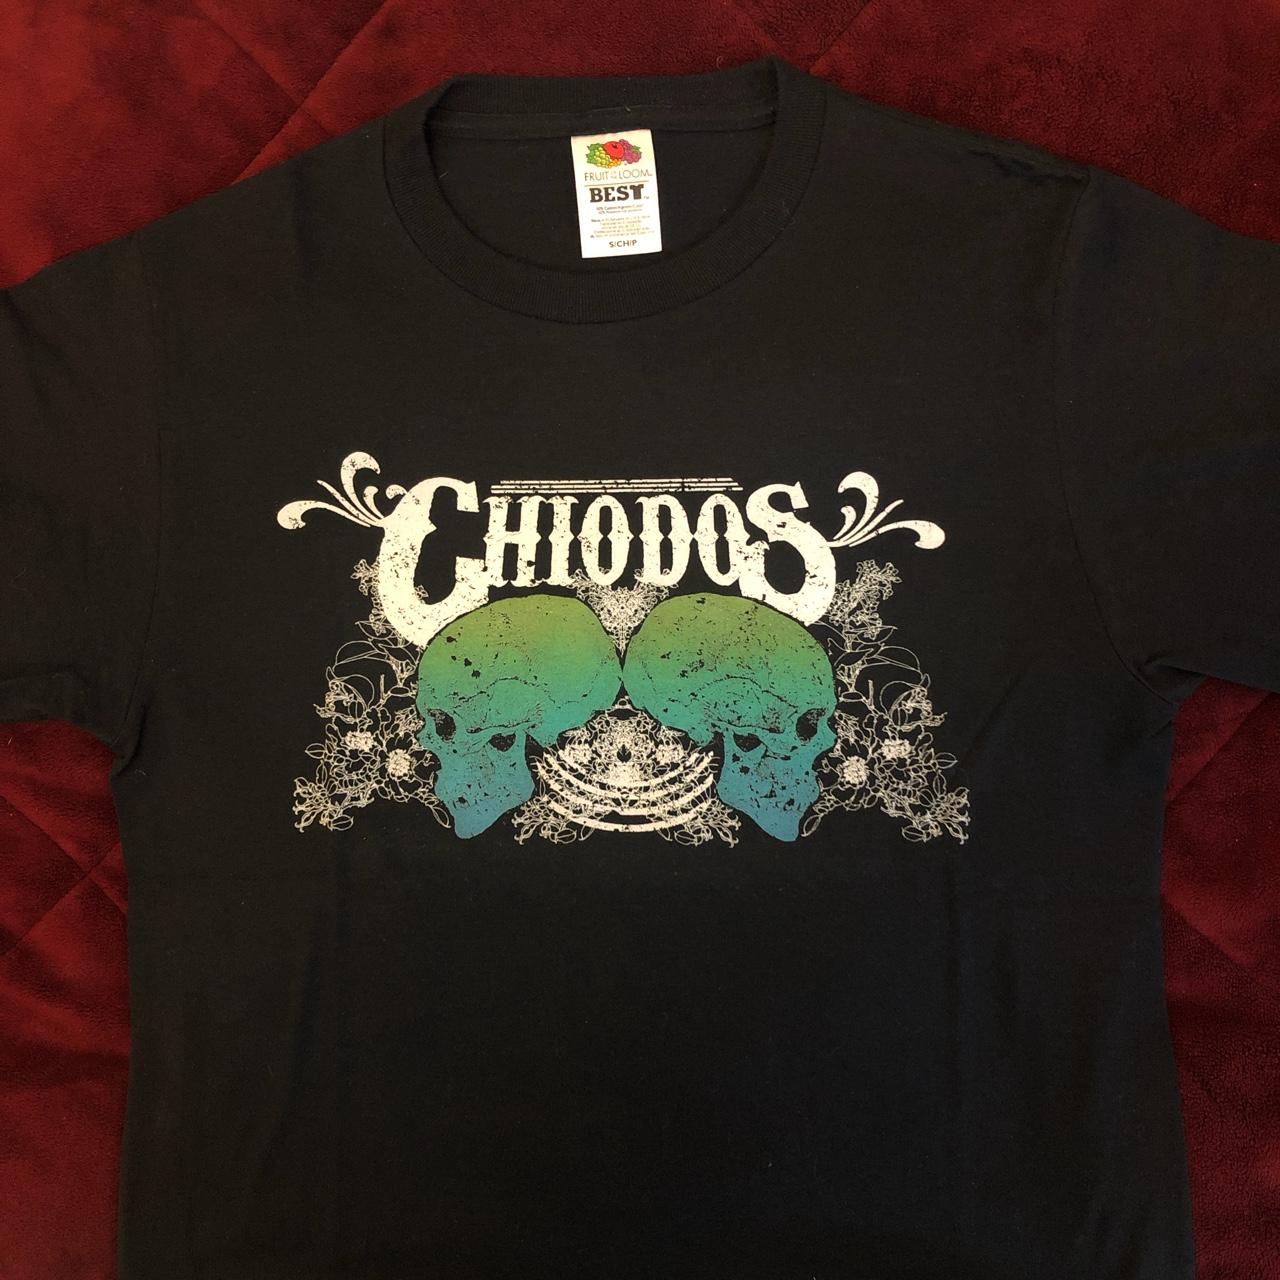 Chaos Men's Black T-shirt